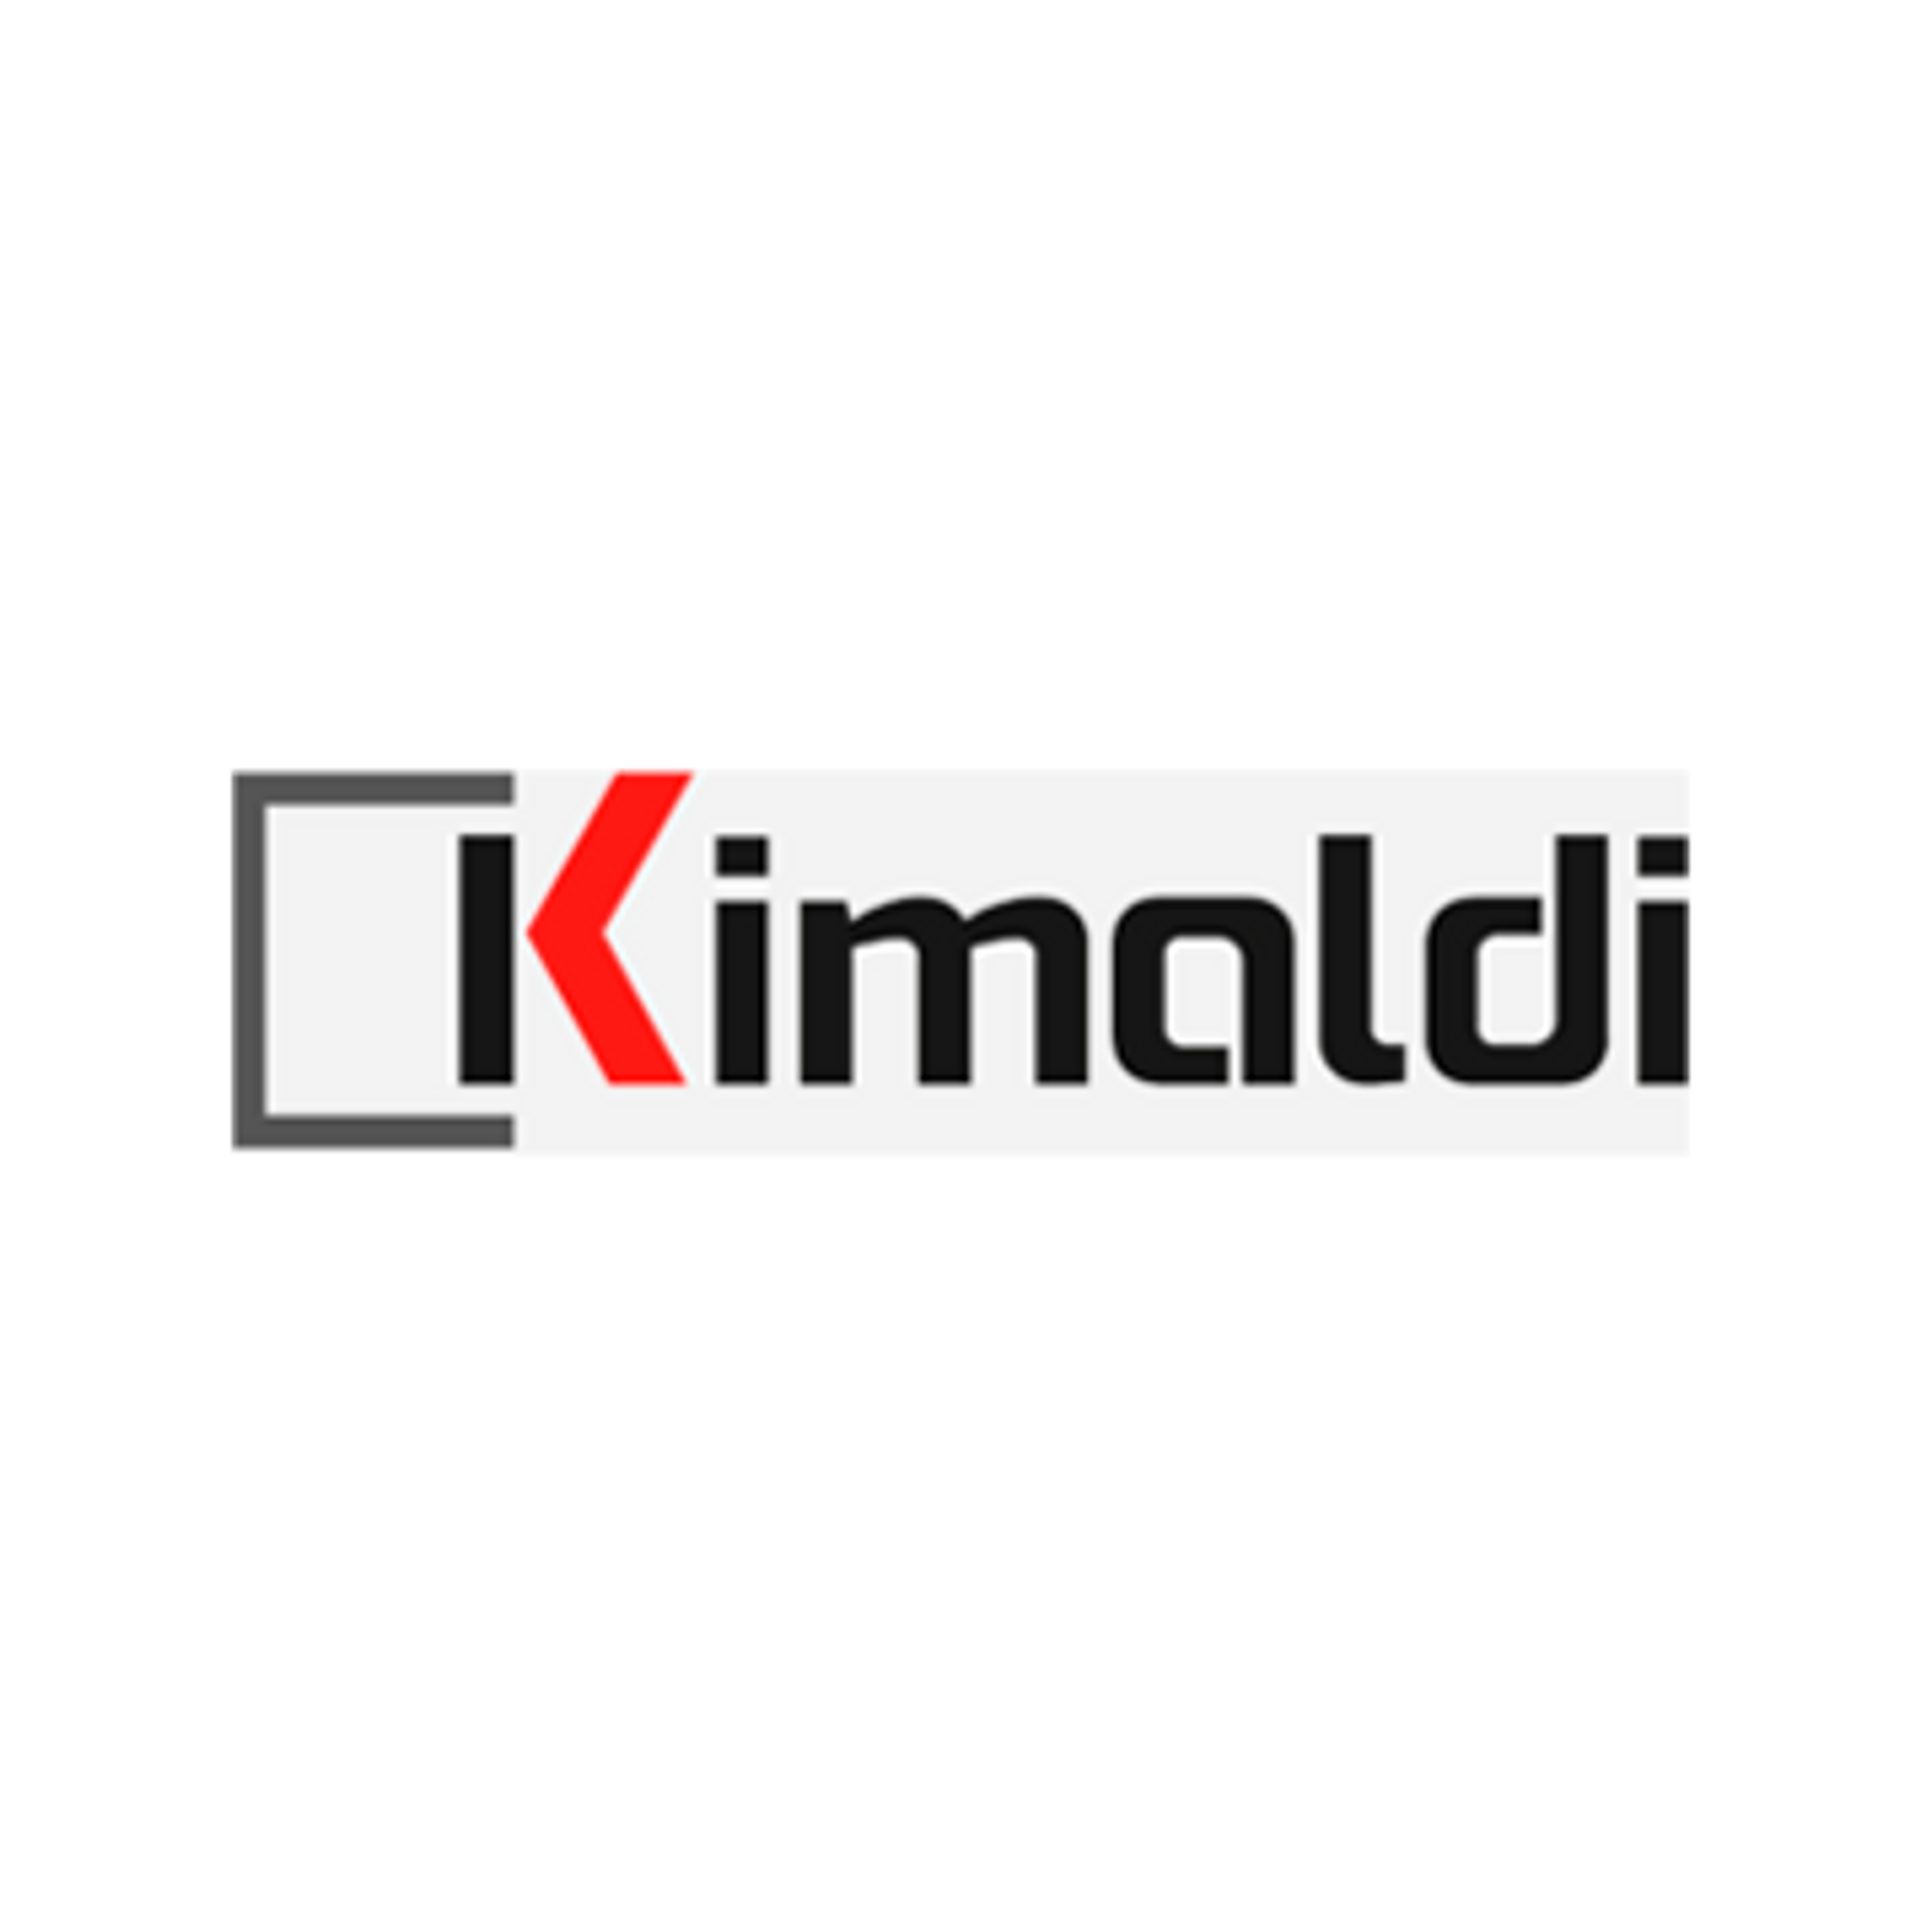 Kimaldi logo